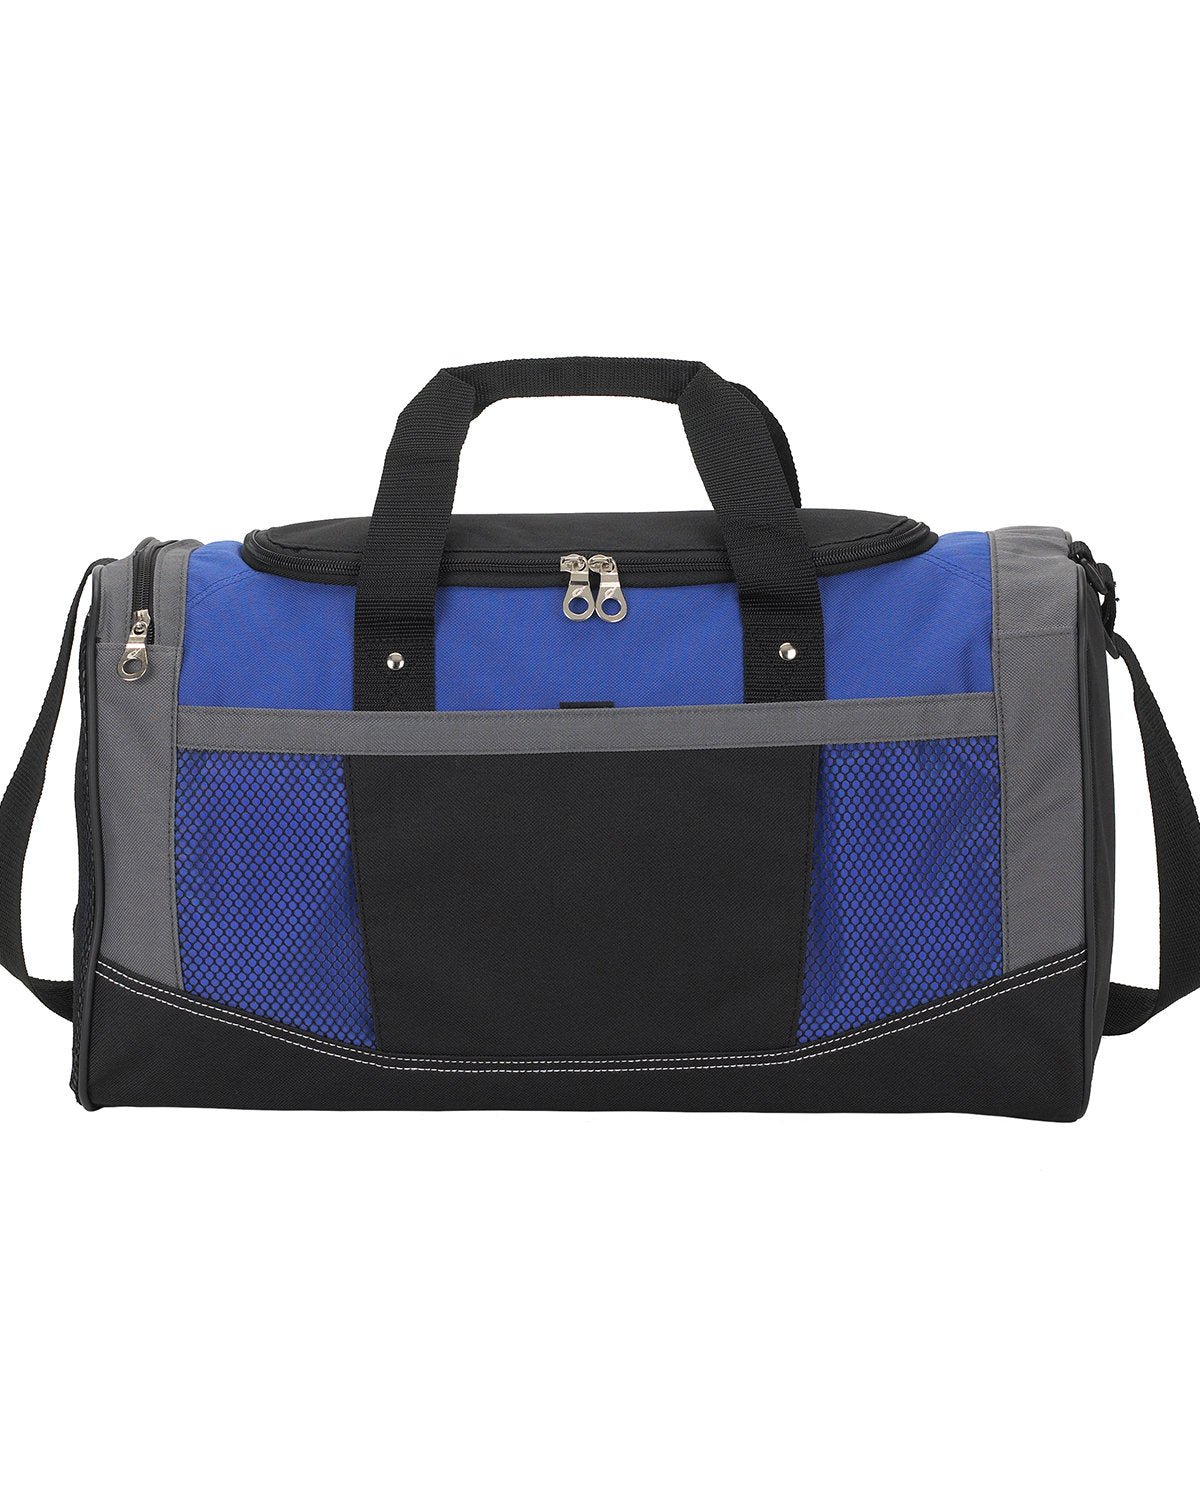 4511-Gemline-ROYAL BLUE-Gemline-Bags and Accessories-1